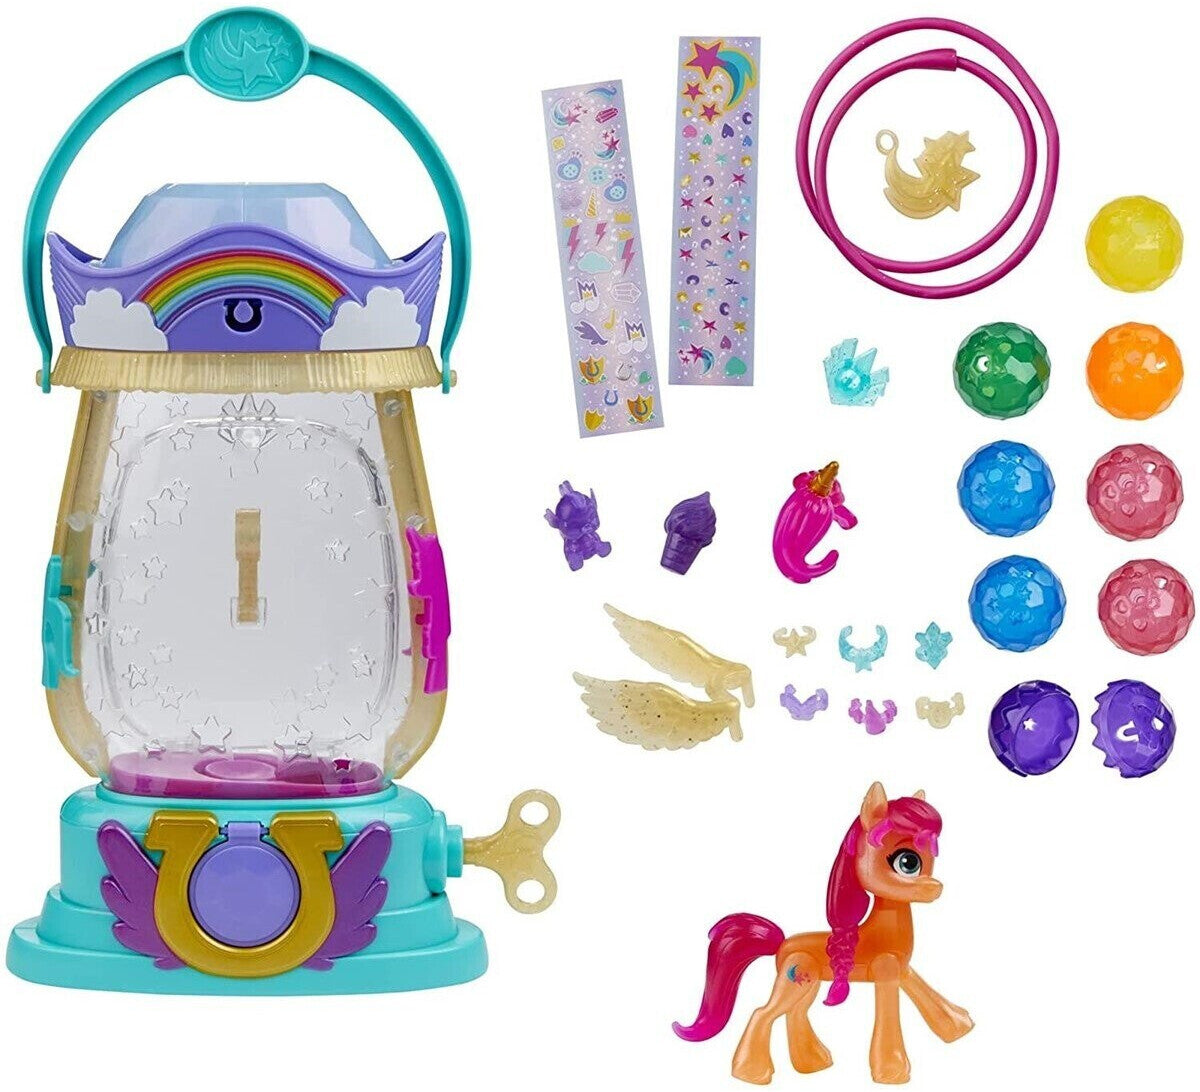 My Little Pony  Eine Neue Generation Farbenspiel-Laterne Sunny Starscout  Hasbro   